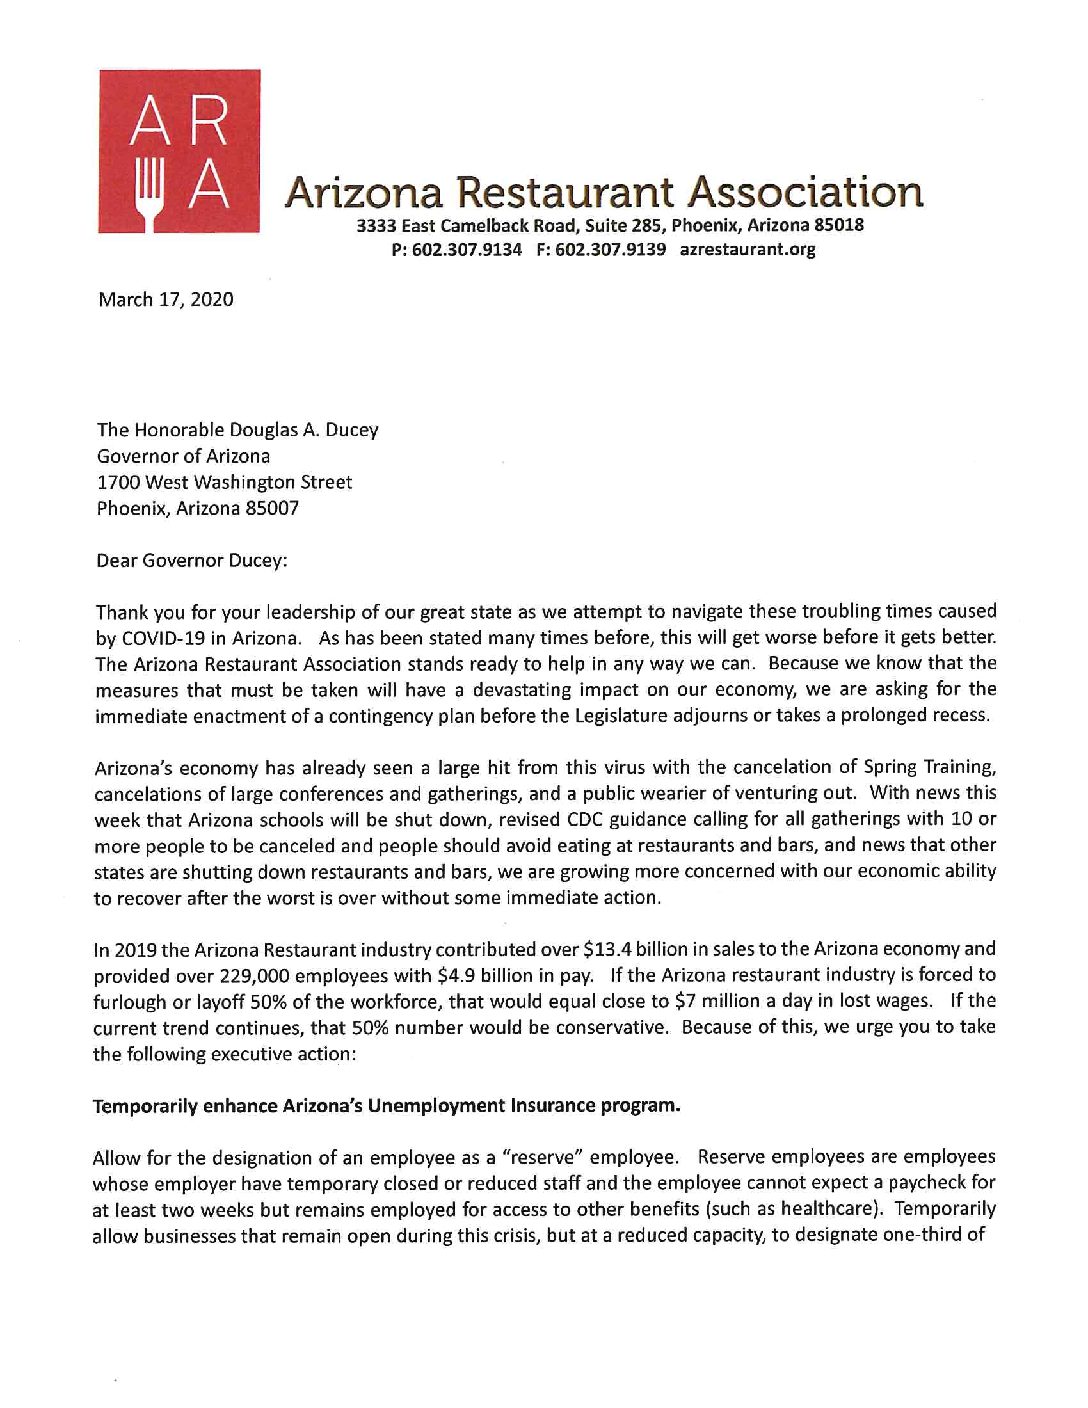 Letter to Governor | Arizona Restaurant Association